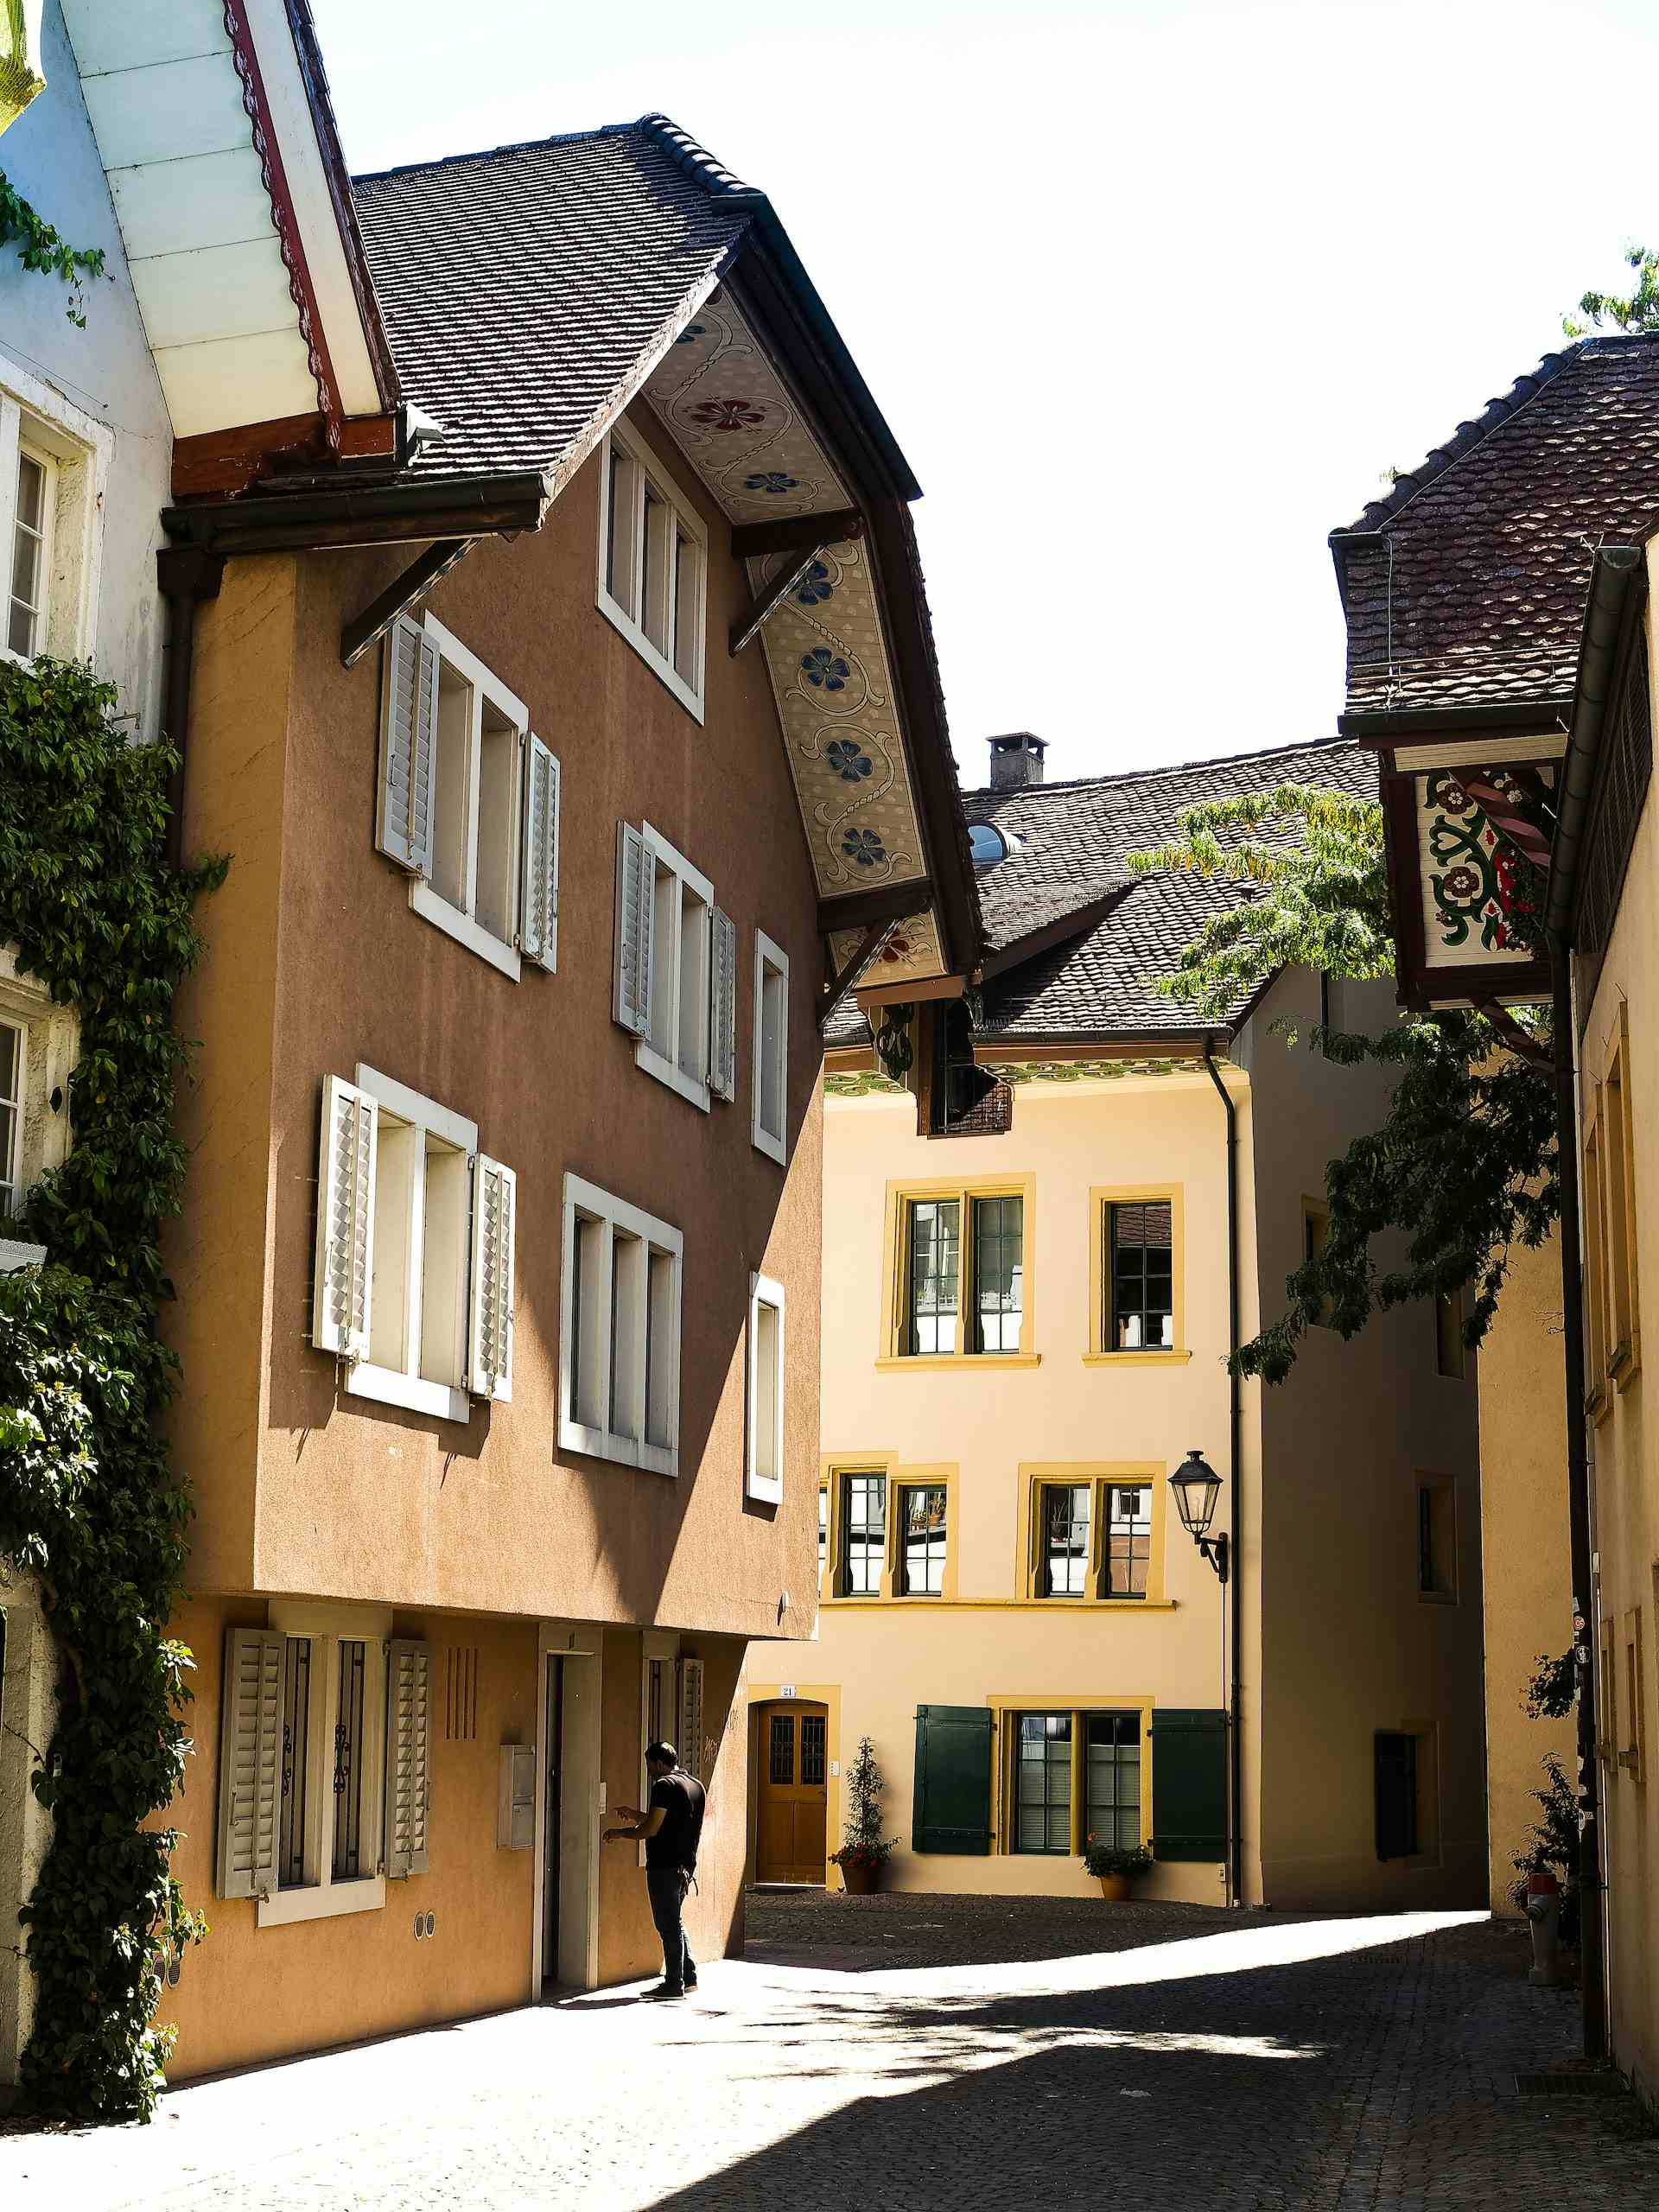 Eckwilerhof , producteur à Mägenwil canton de Argovie en Suisse